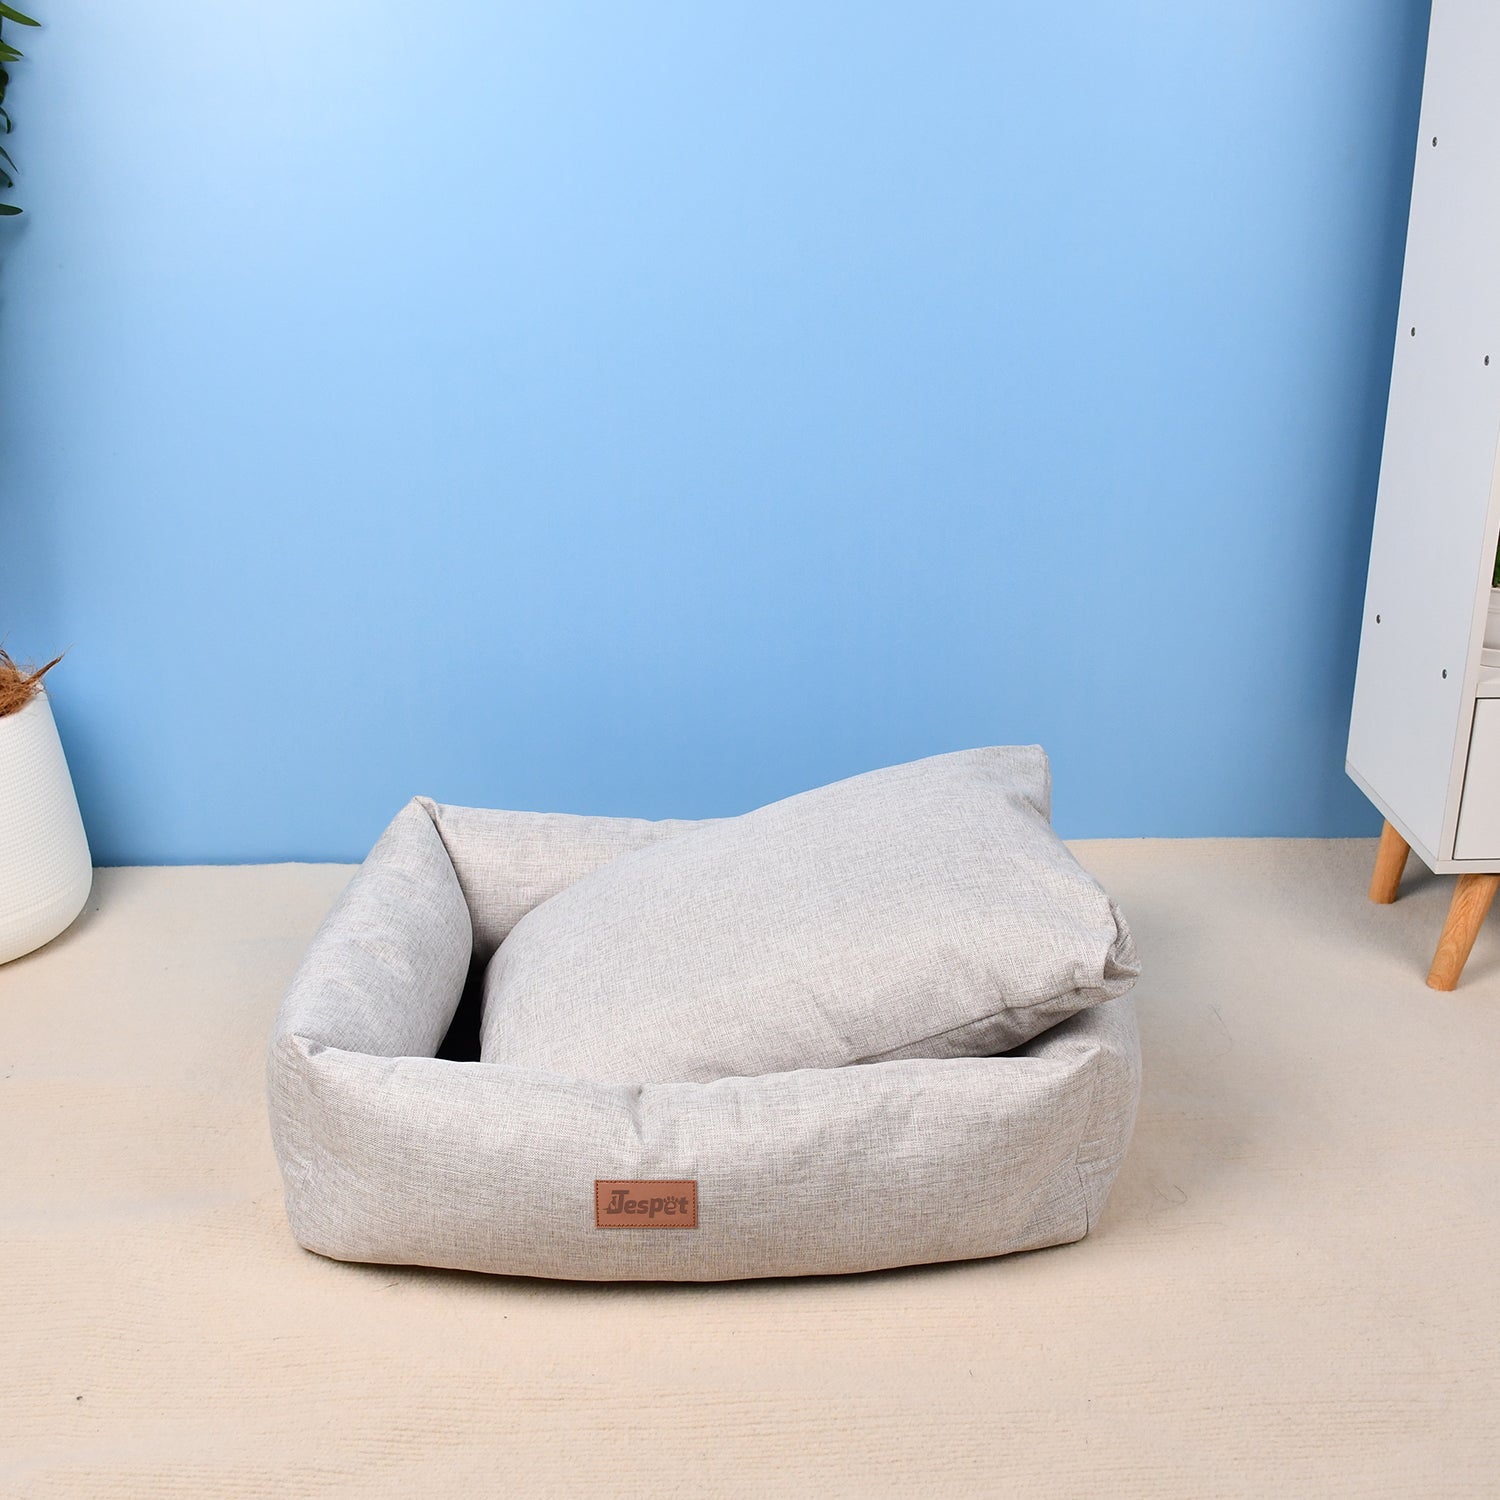 Jespet Durable Dog Bed, Comfortable Egg-Crate Foam Sofa, Khaki